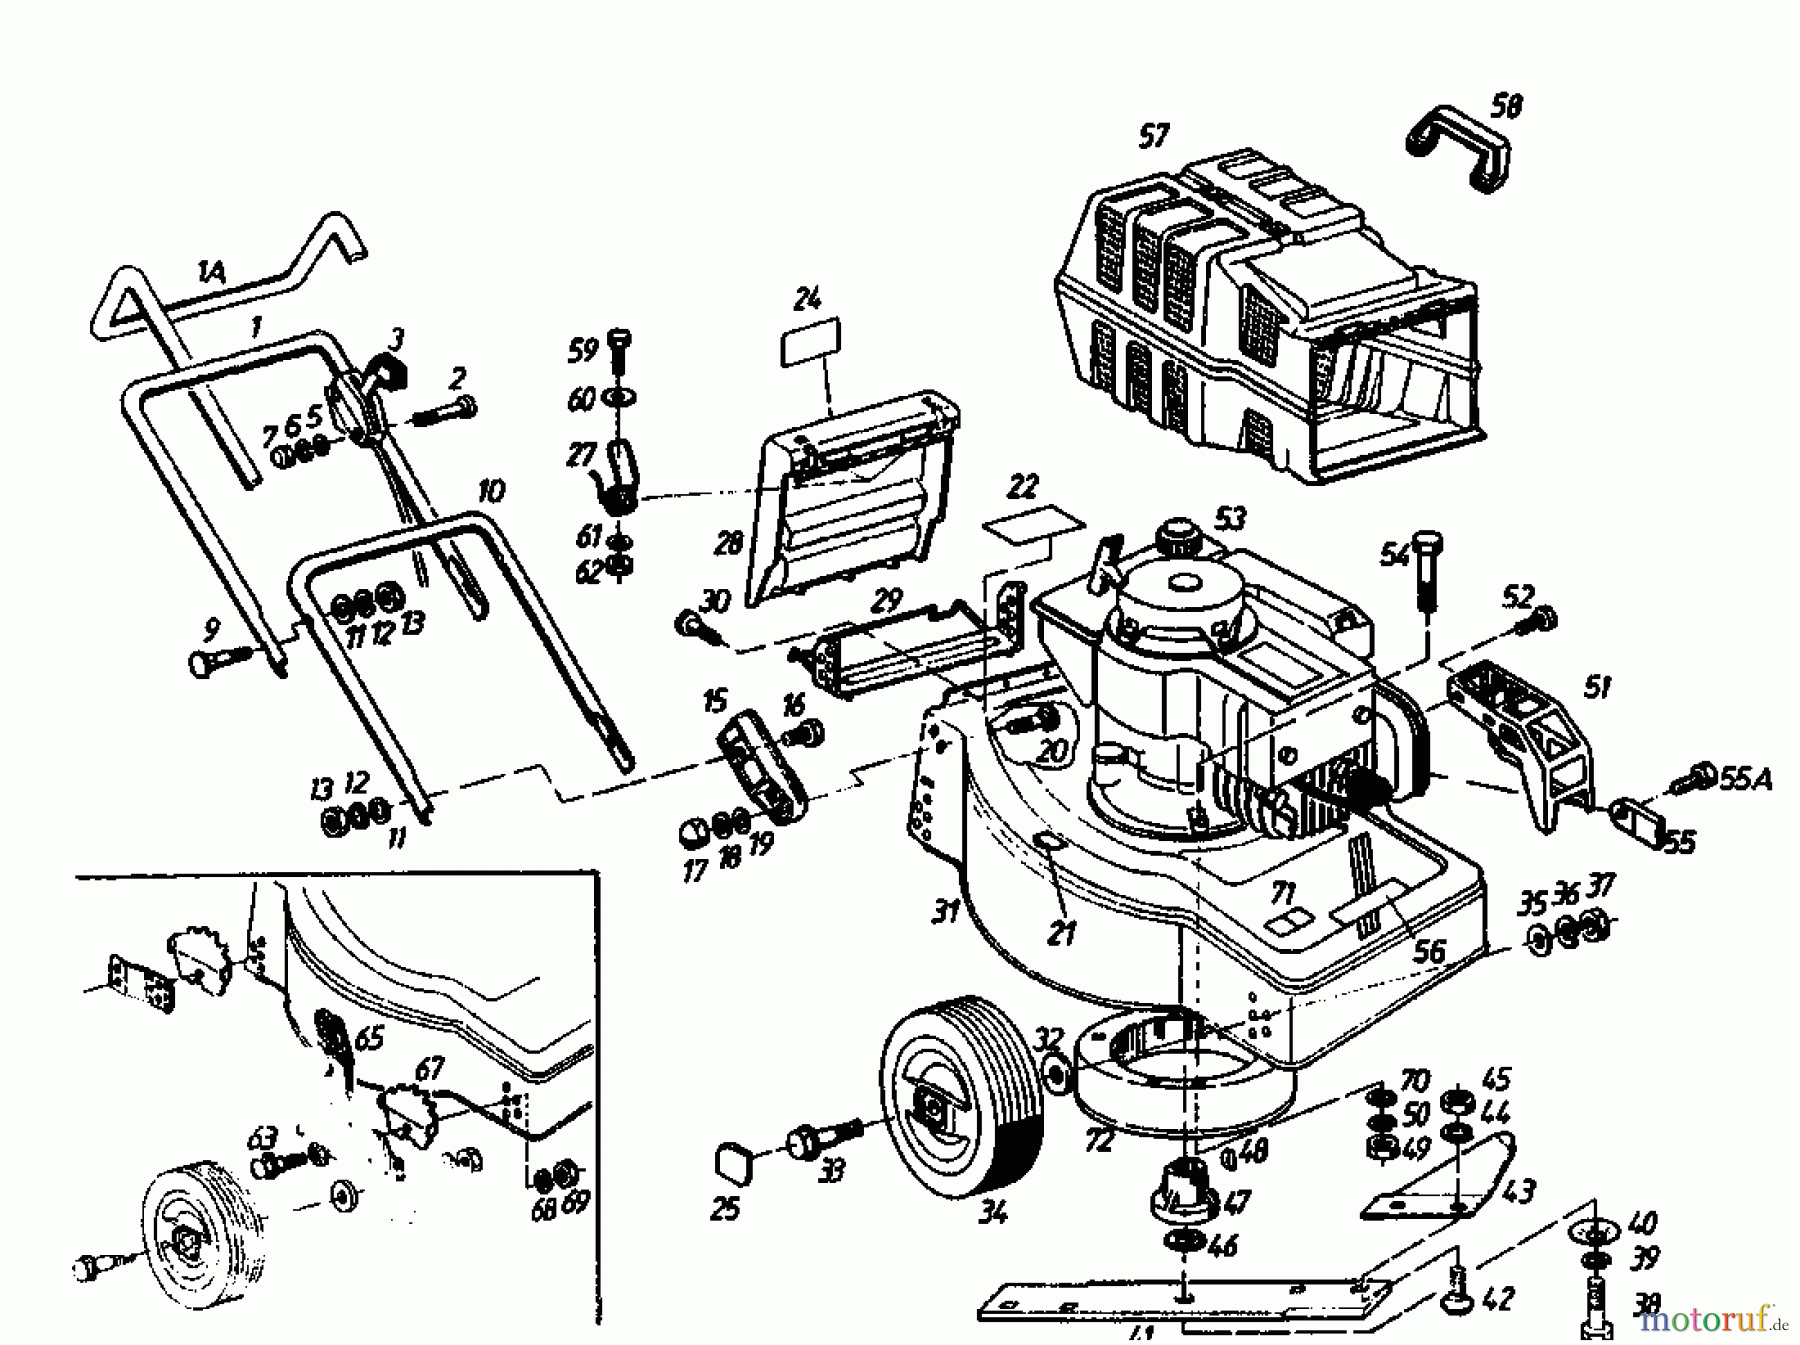  Golf Petrol mower B 02880.01  (1987) Basic machine